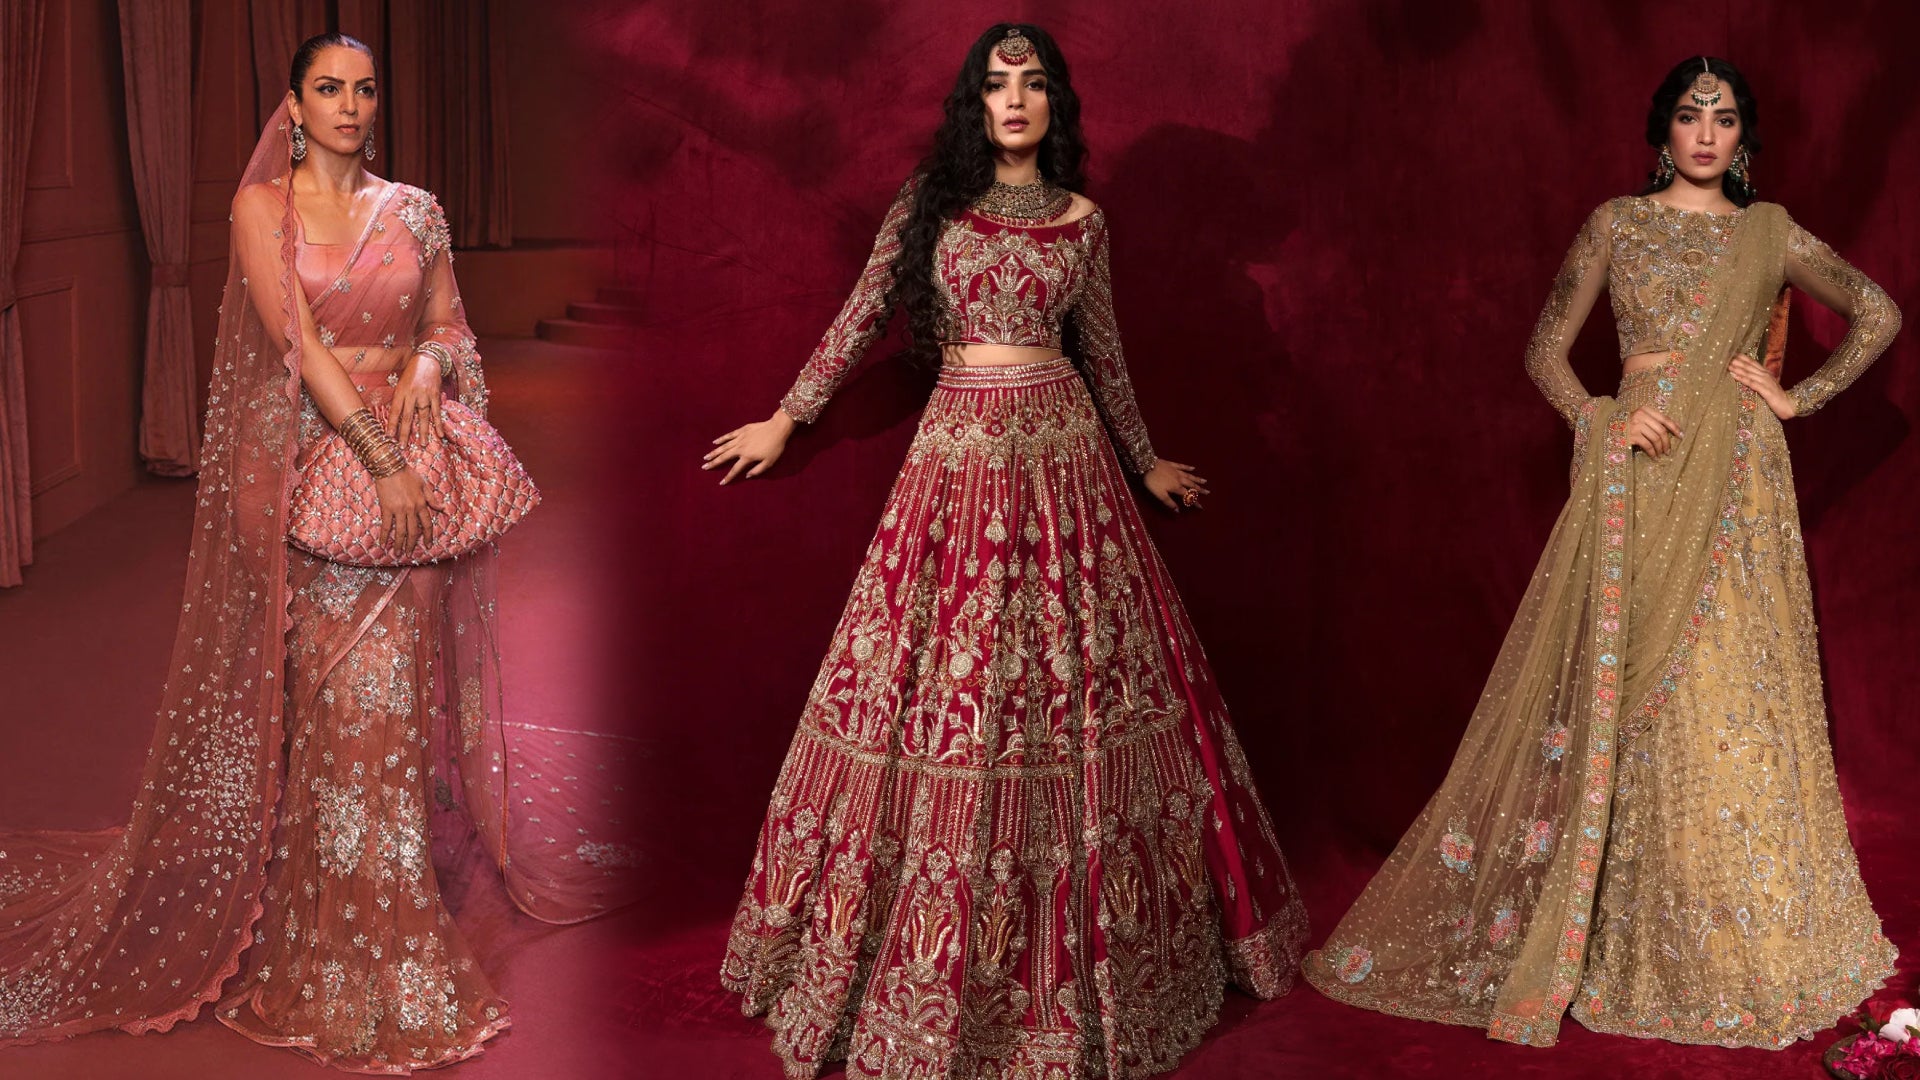 Bridal Saree Or Wedding Lehenga: What is the Best for Bride? – Suvidha  Fashion